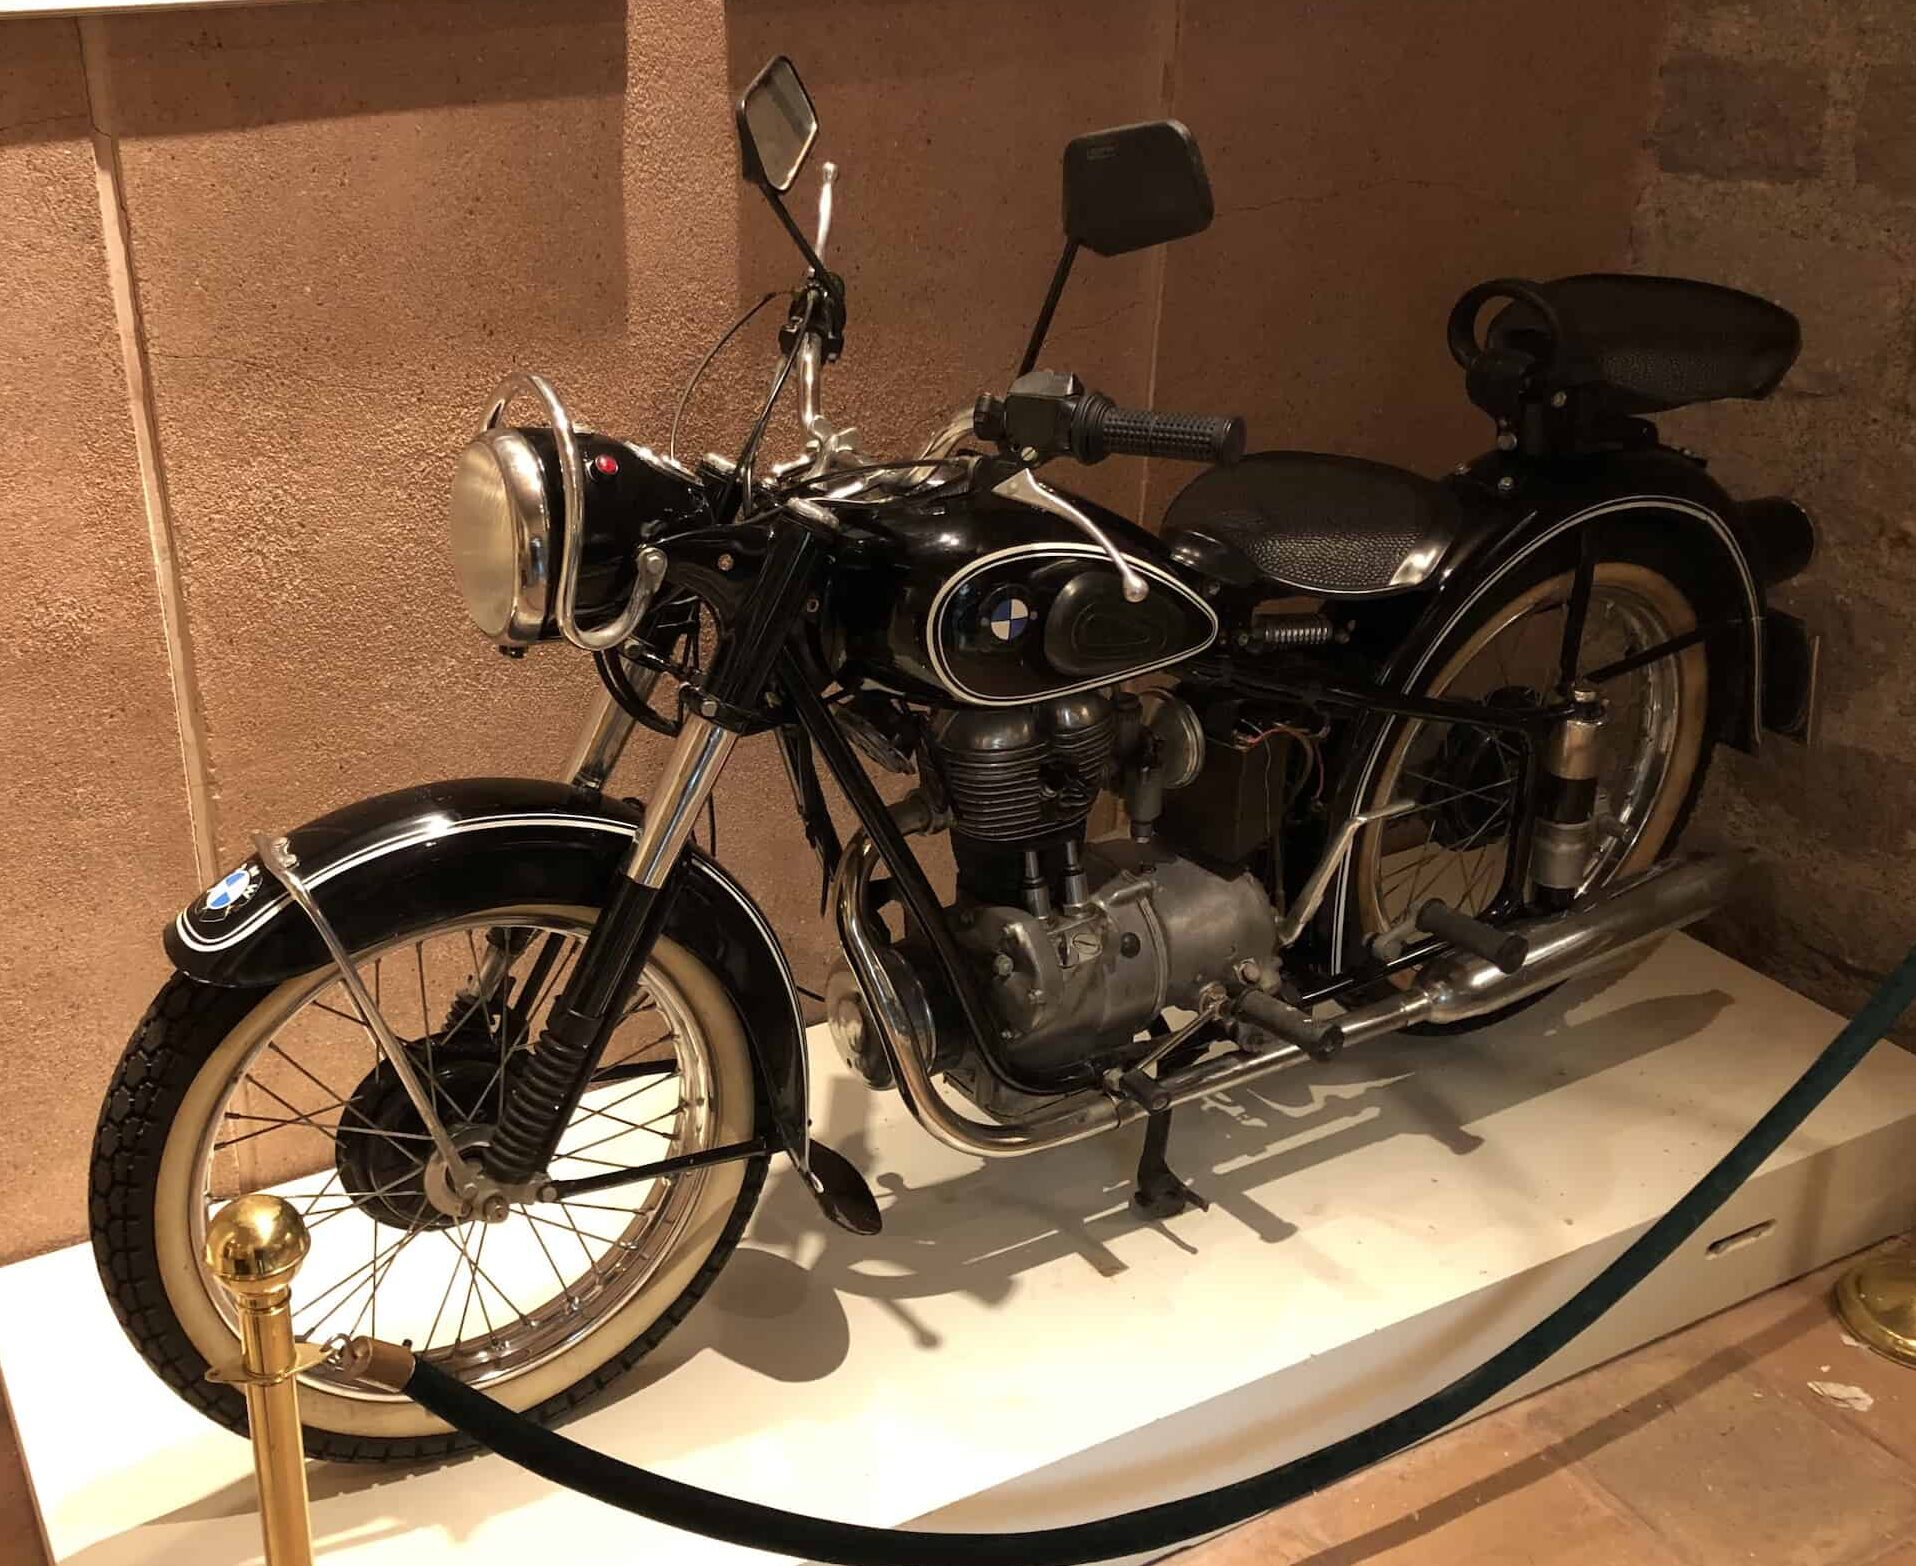 BMW motorcycle at the Rahmi M. Koç Museum in Ankara, Turkey